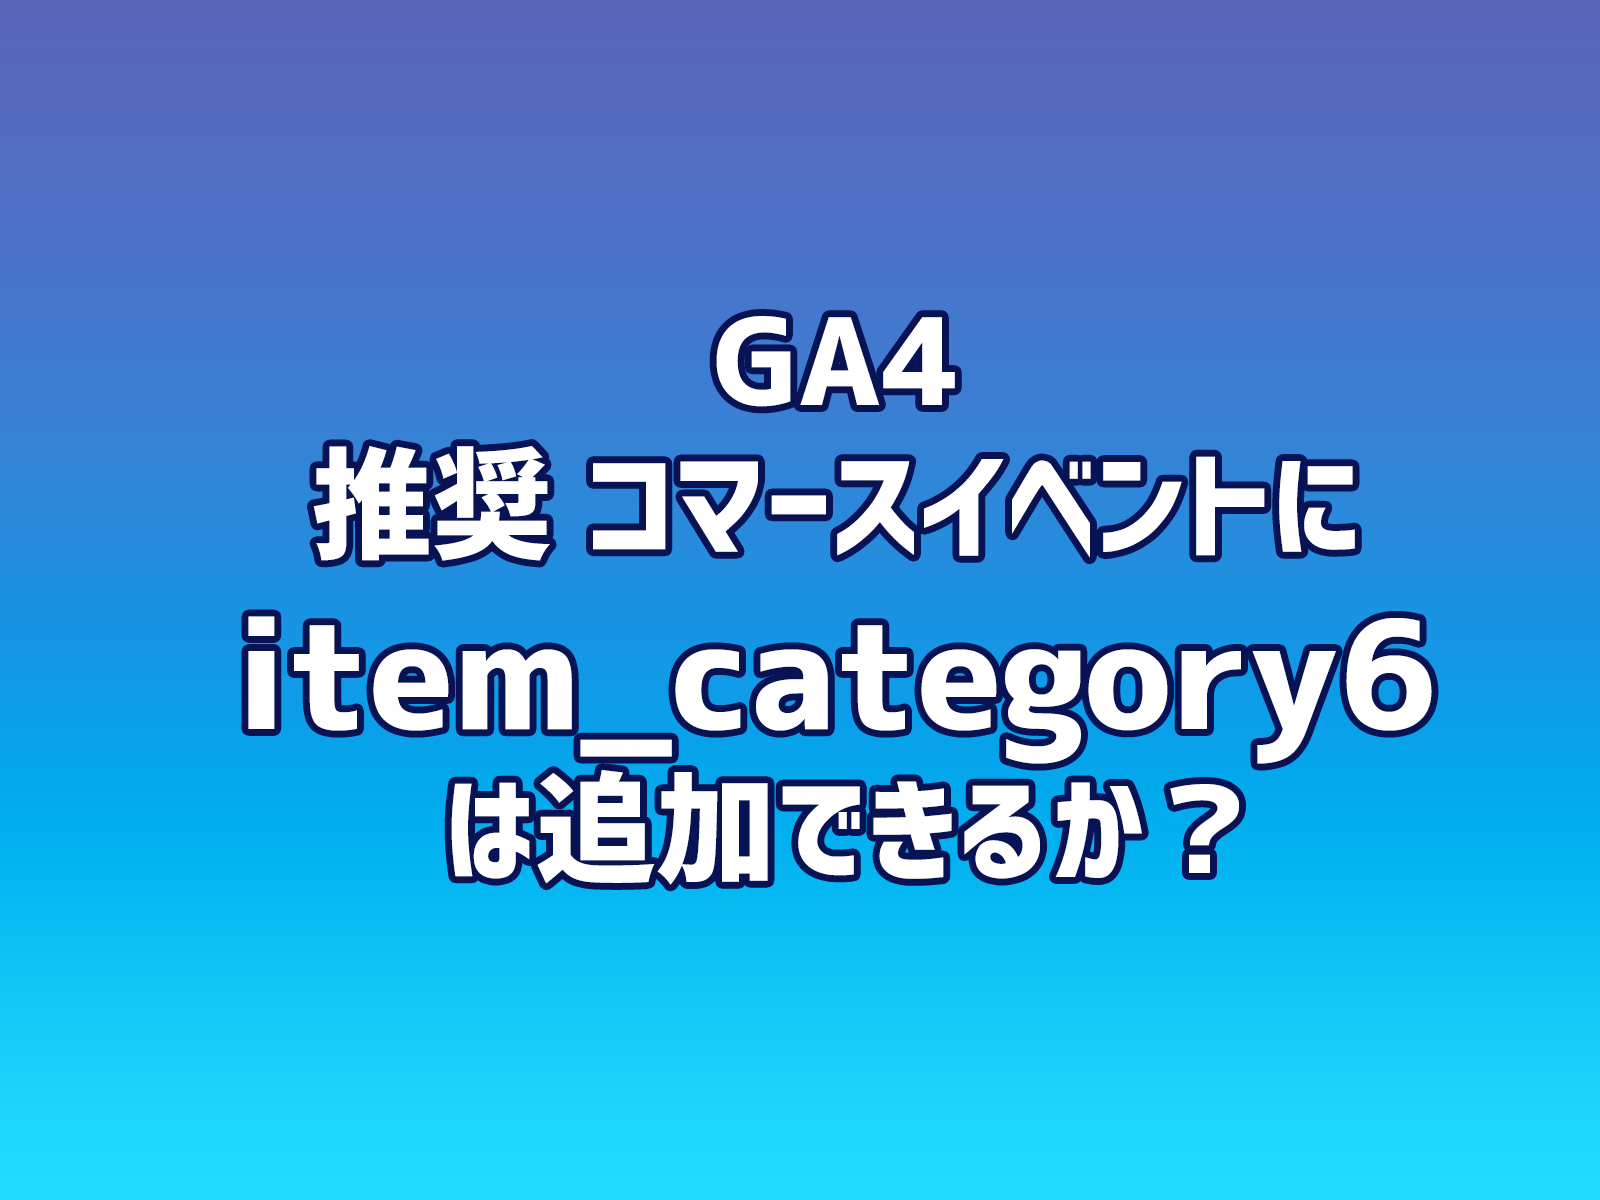 Cover Image for GA4 推奨 コマースイベントに item_category6 は追加できるか？